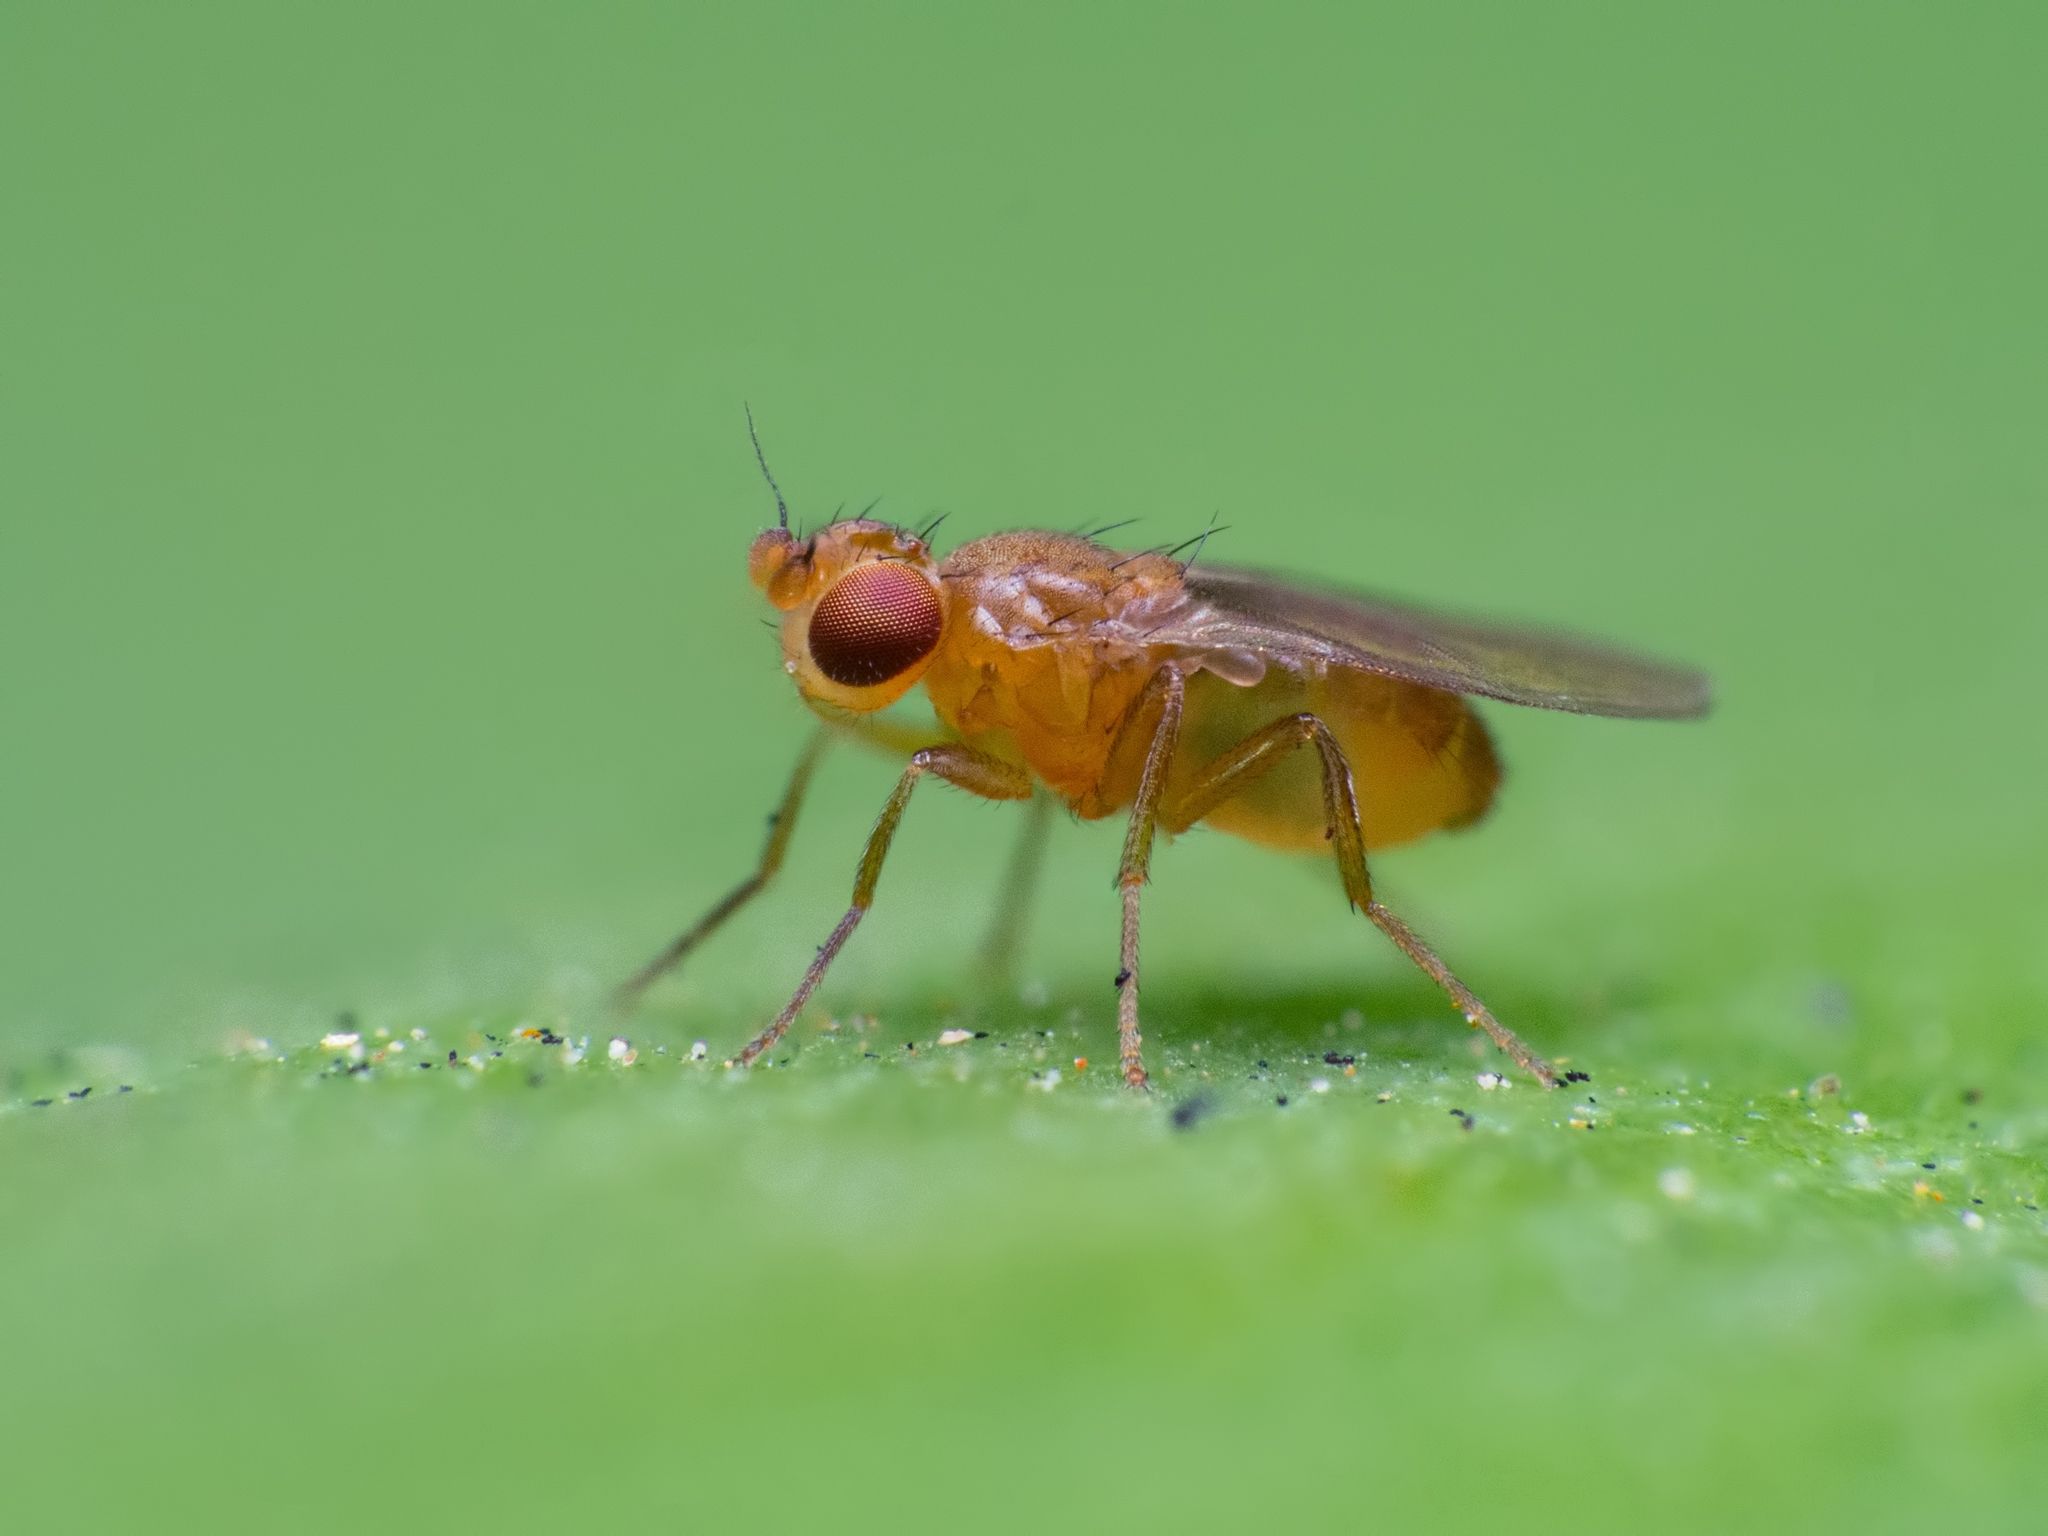 https://hips.hearstapps.com/hmg-prod/images/macro-of-a-drosophila-fruit-fly-royalty-free-image-1598887519.jpg